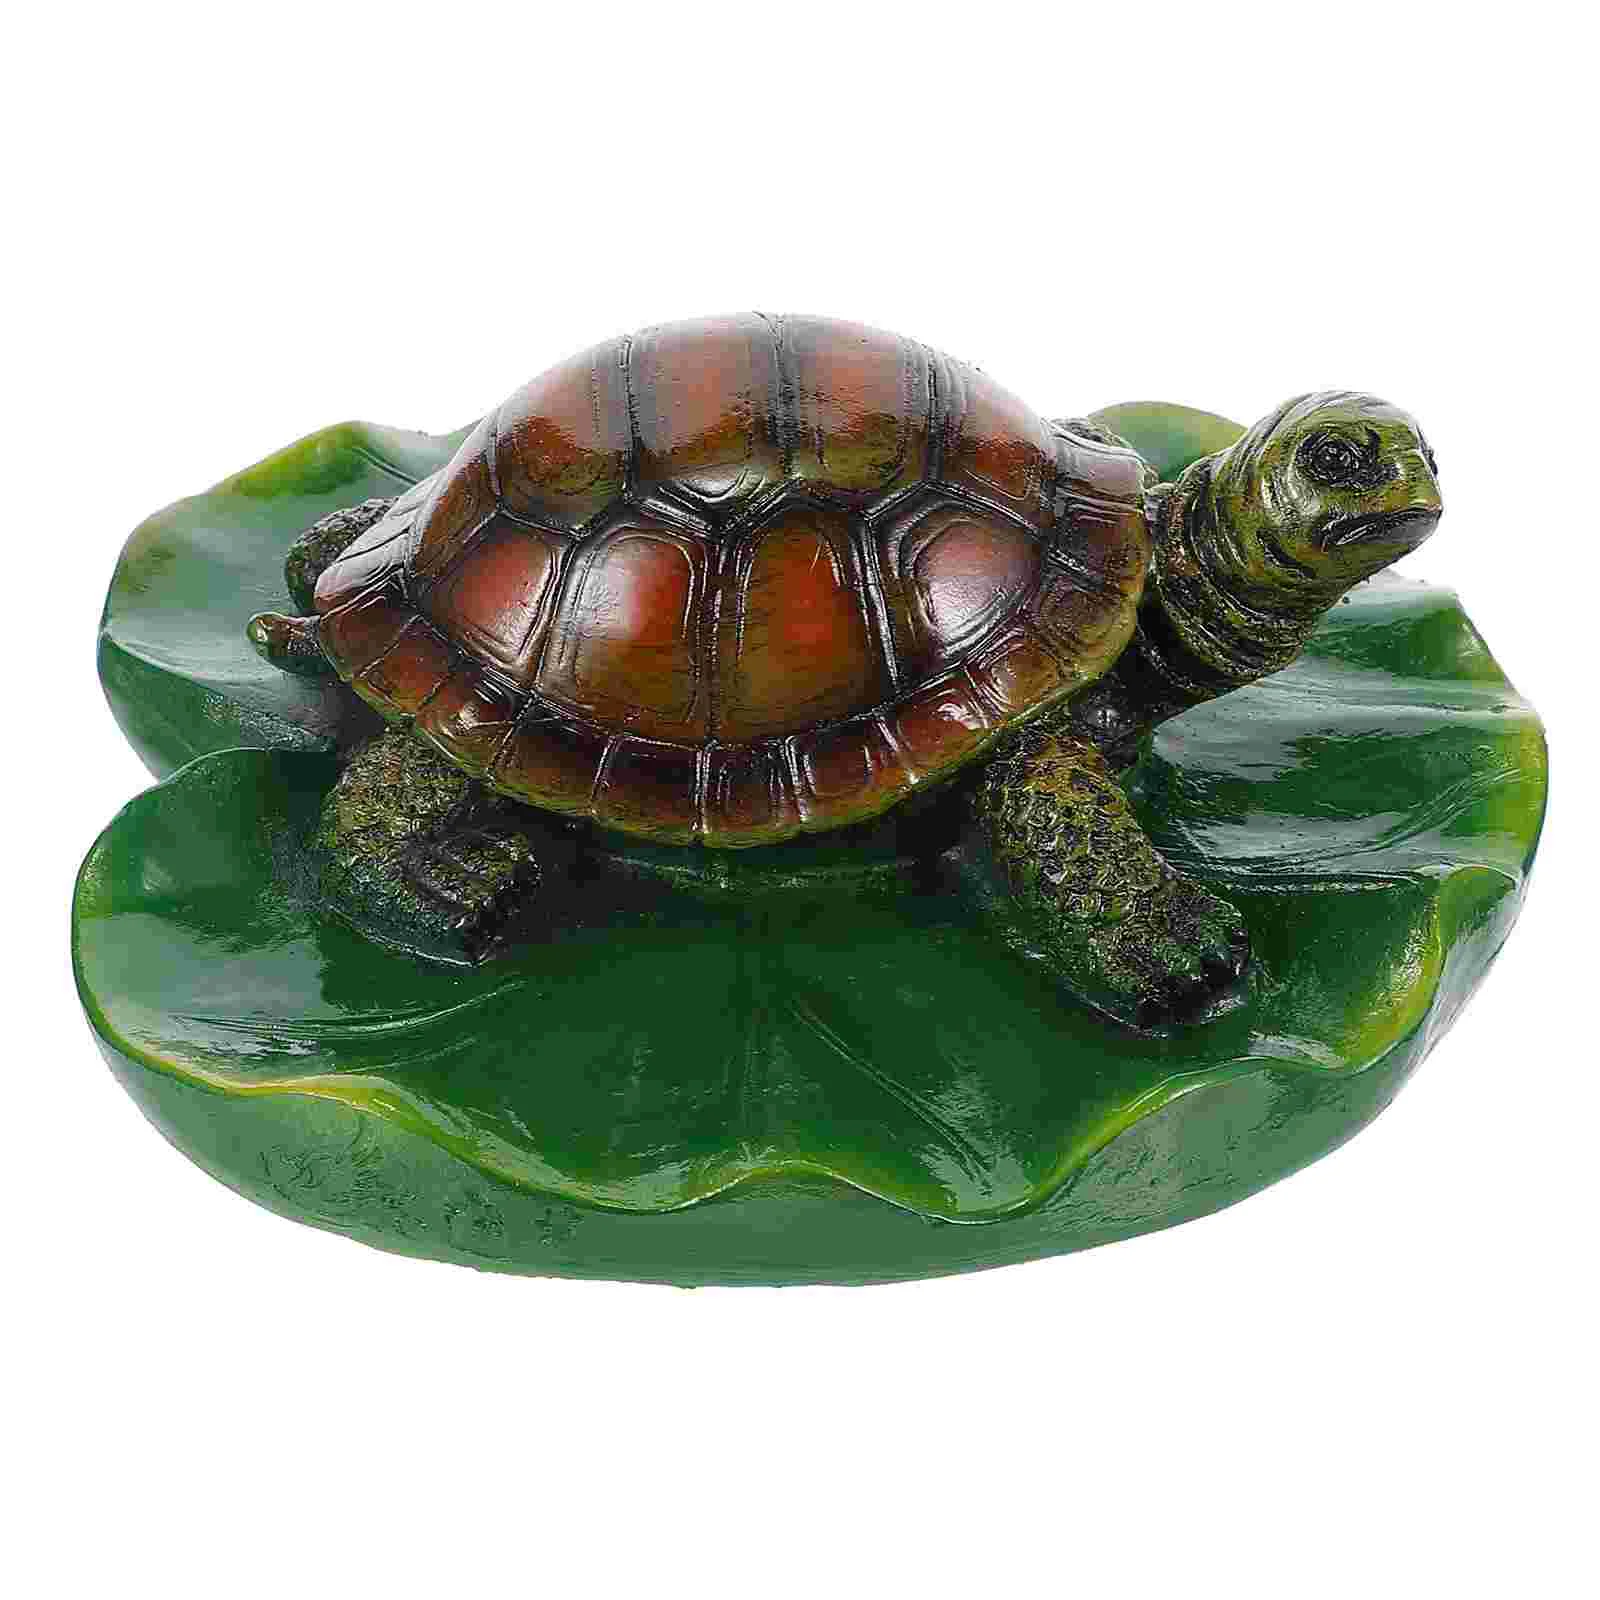 

1Pc Floating Pond Decor Novel Lifelike Gift Simulation Turtle Figurine Ornament